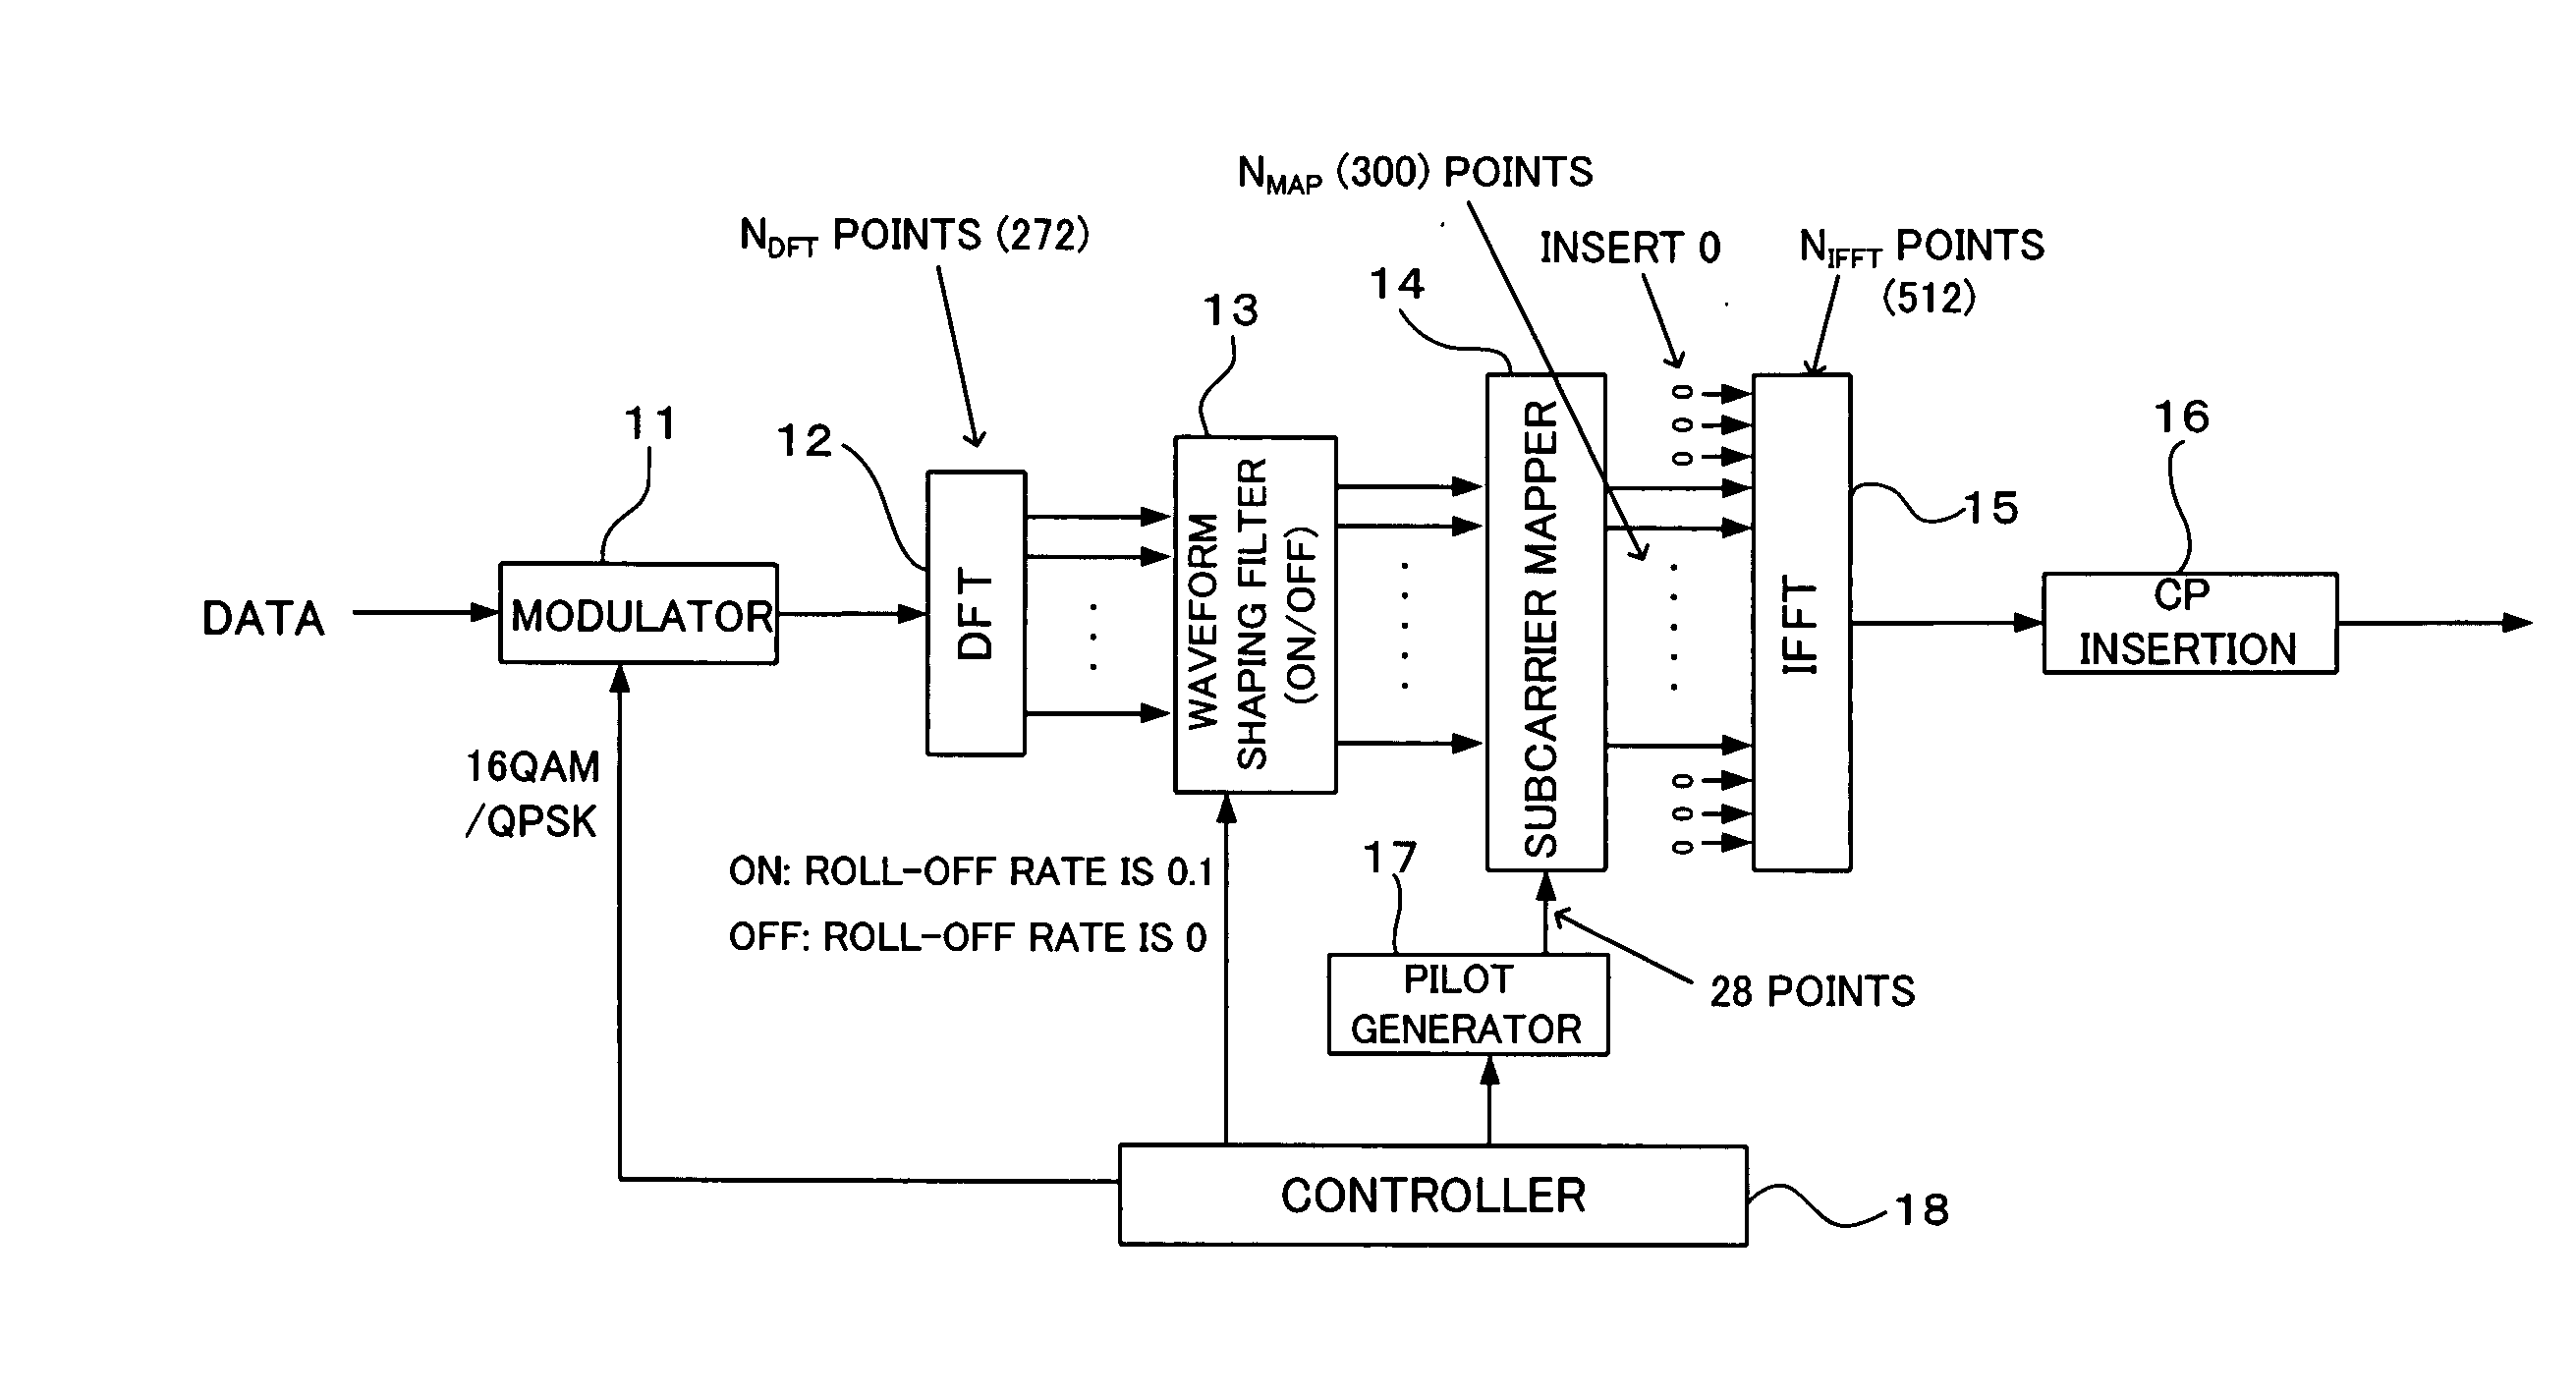 Transmitter and transmission method